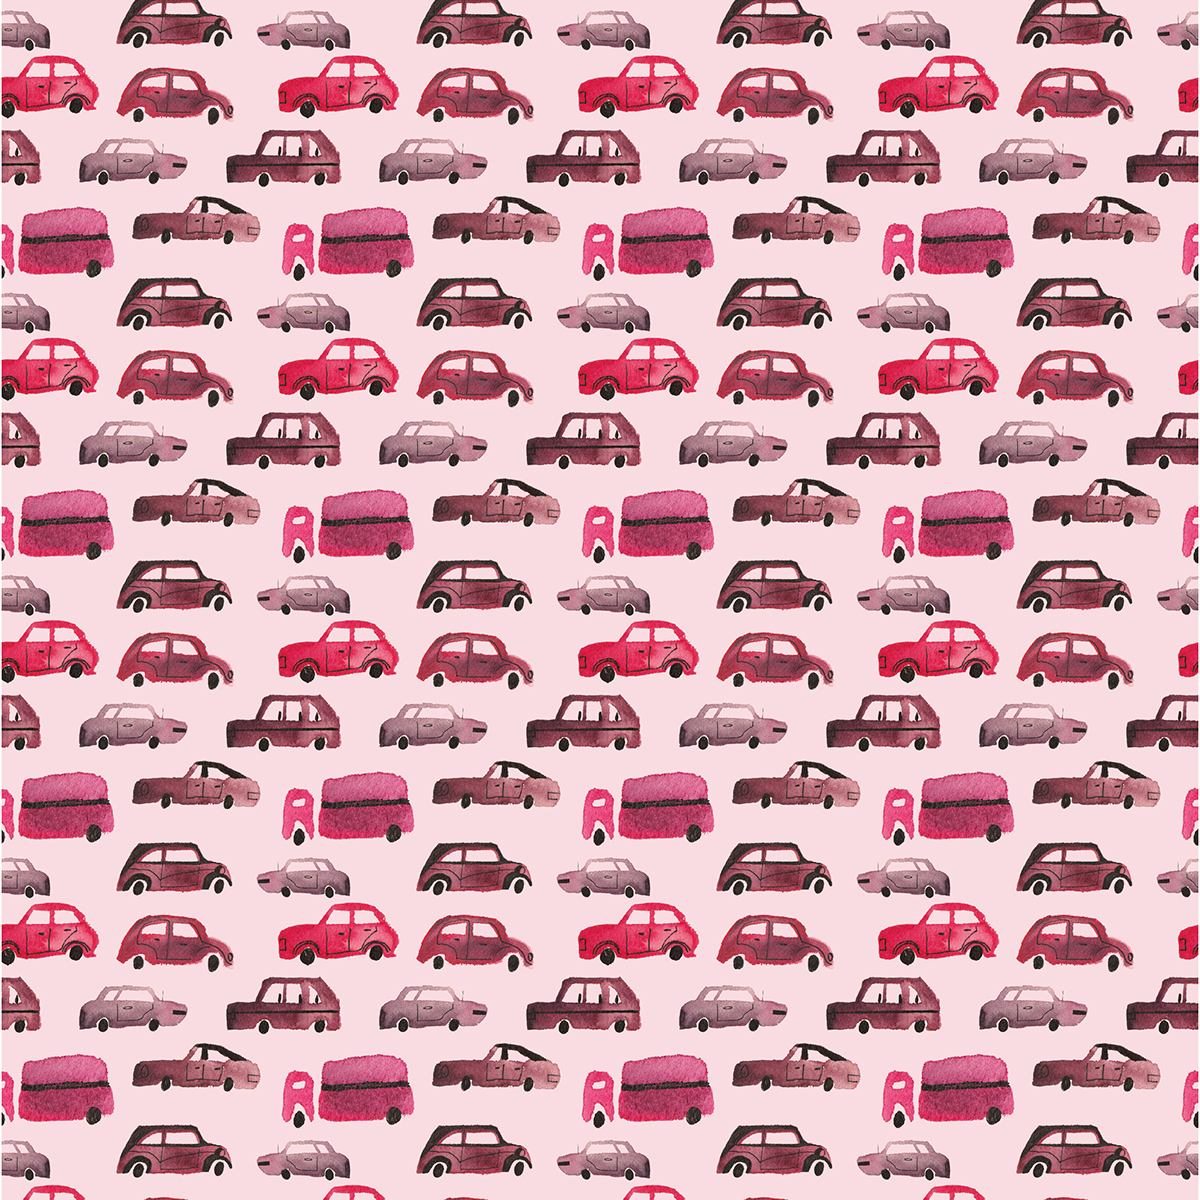 pattern Patterns print prints watercolor gouache house town polka dot winter red pink Cars vintage